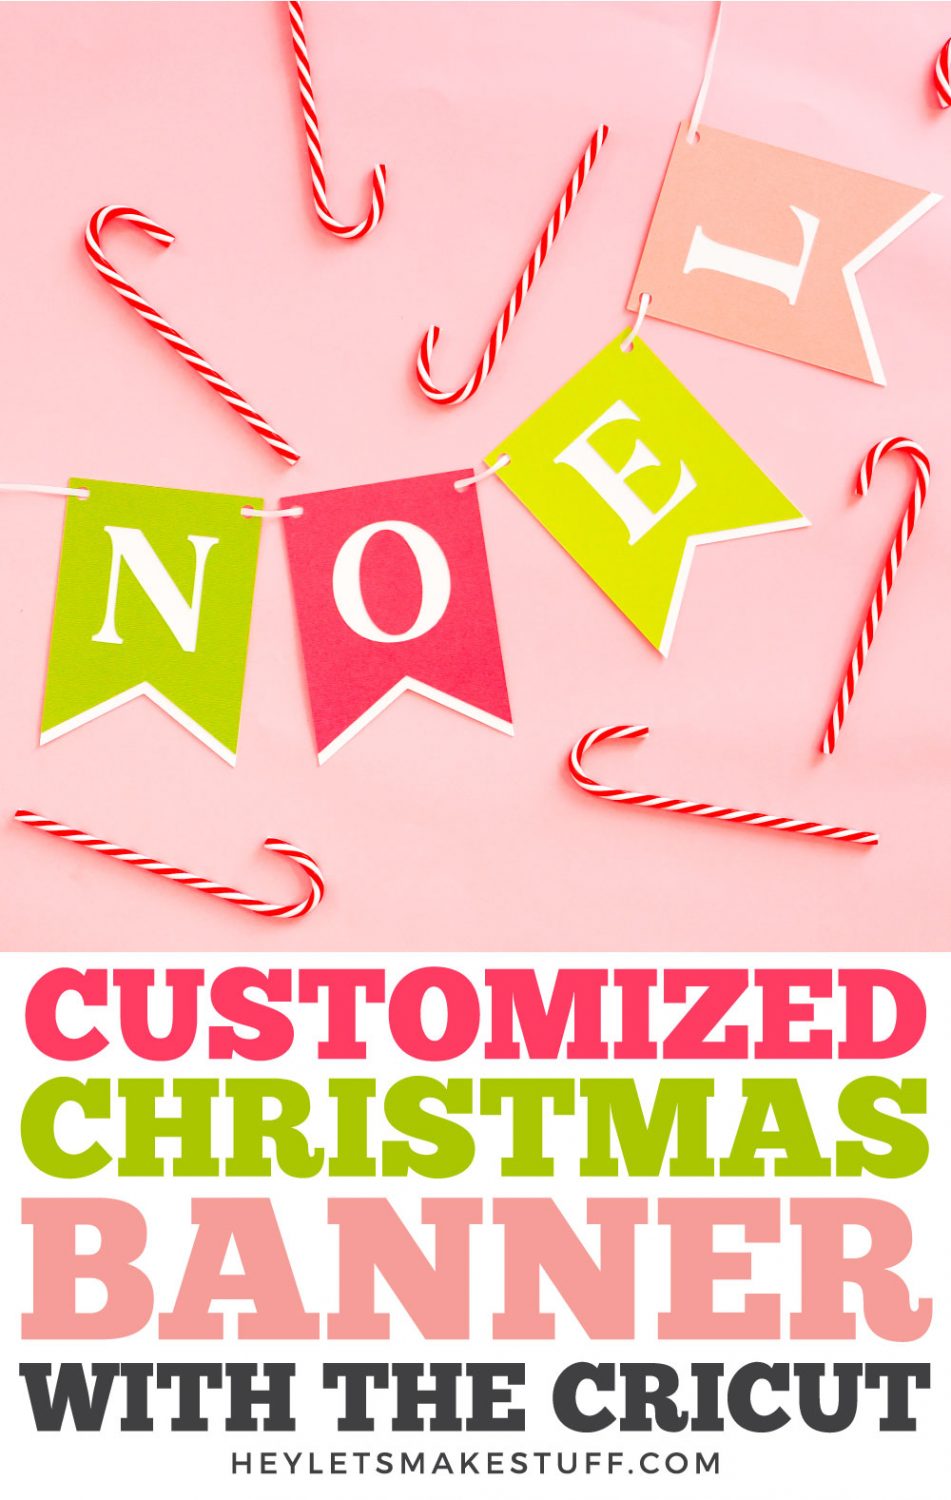 Customized Christmas banner 